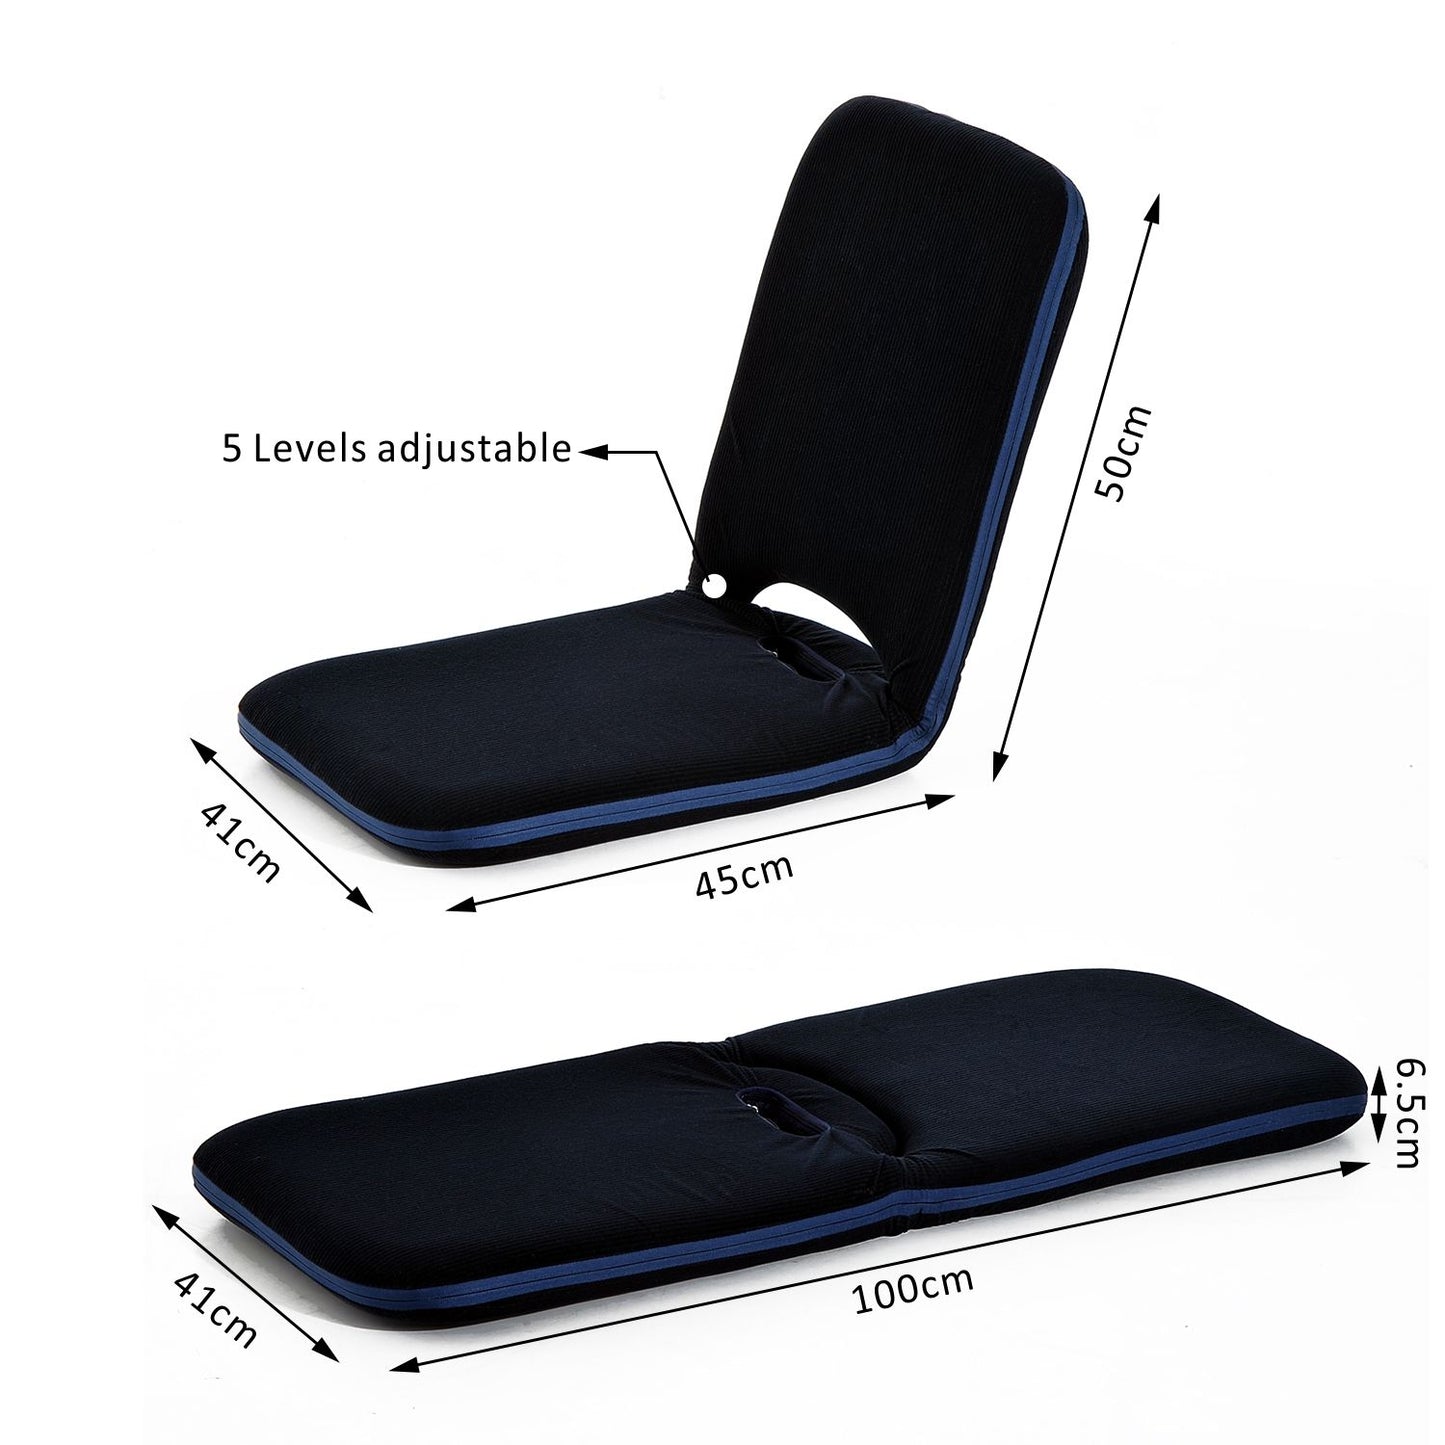 HOMCOM Steel Foldable Floor Backrest Chair Blue